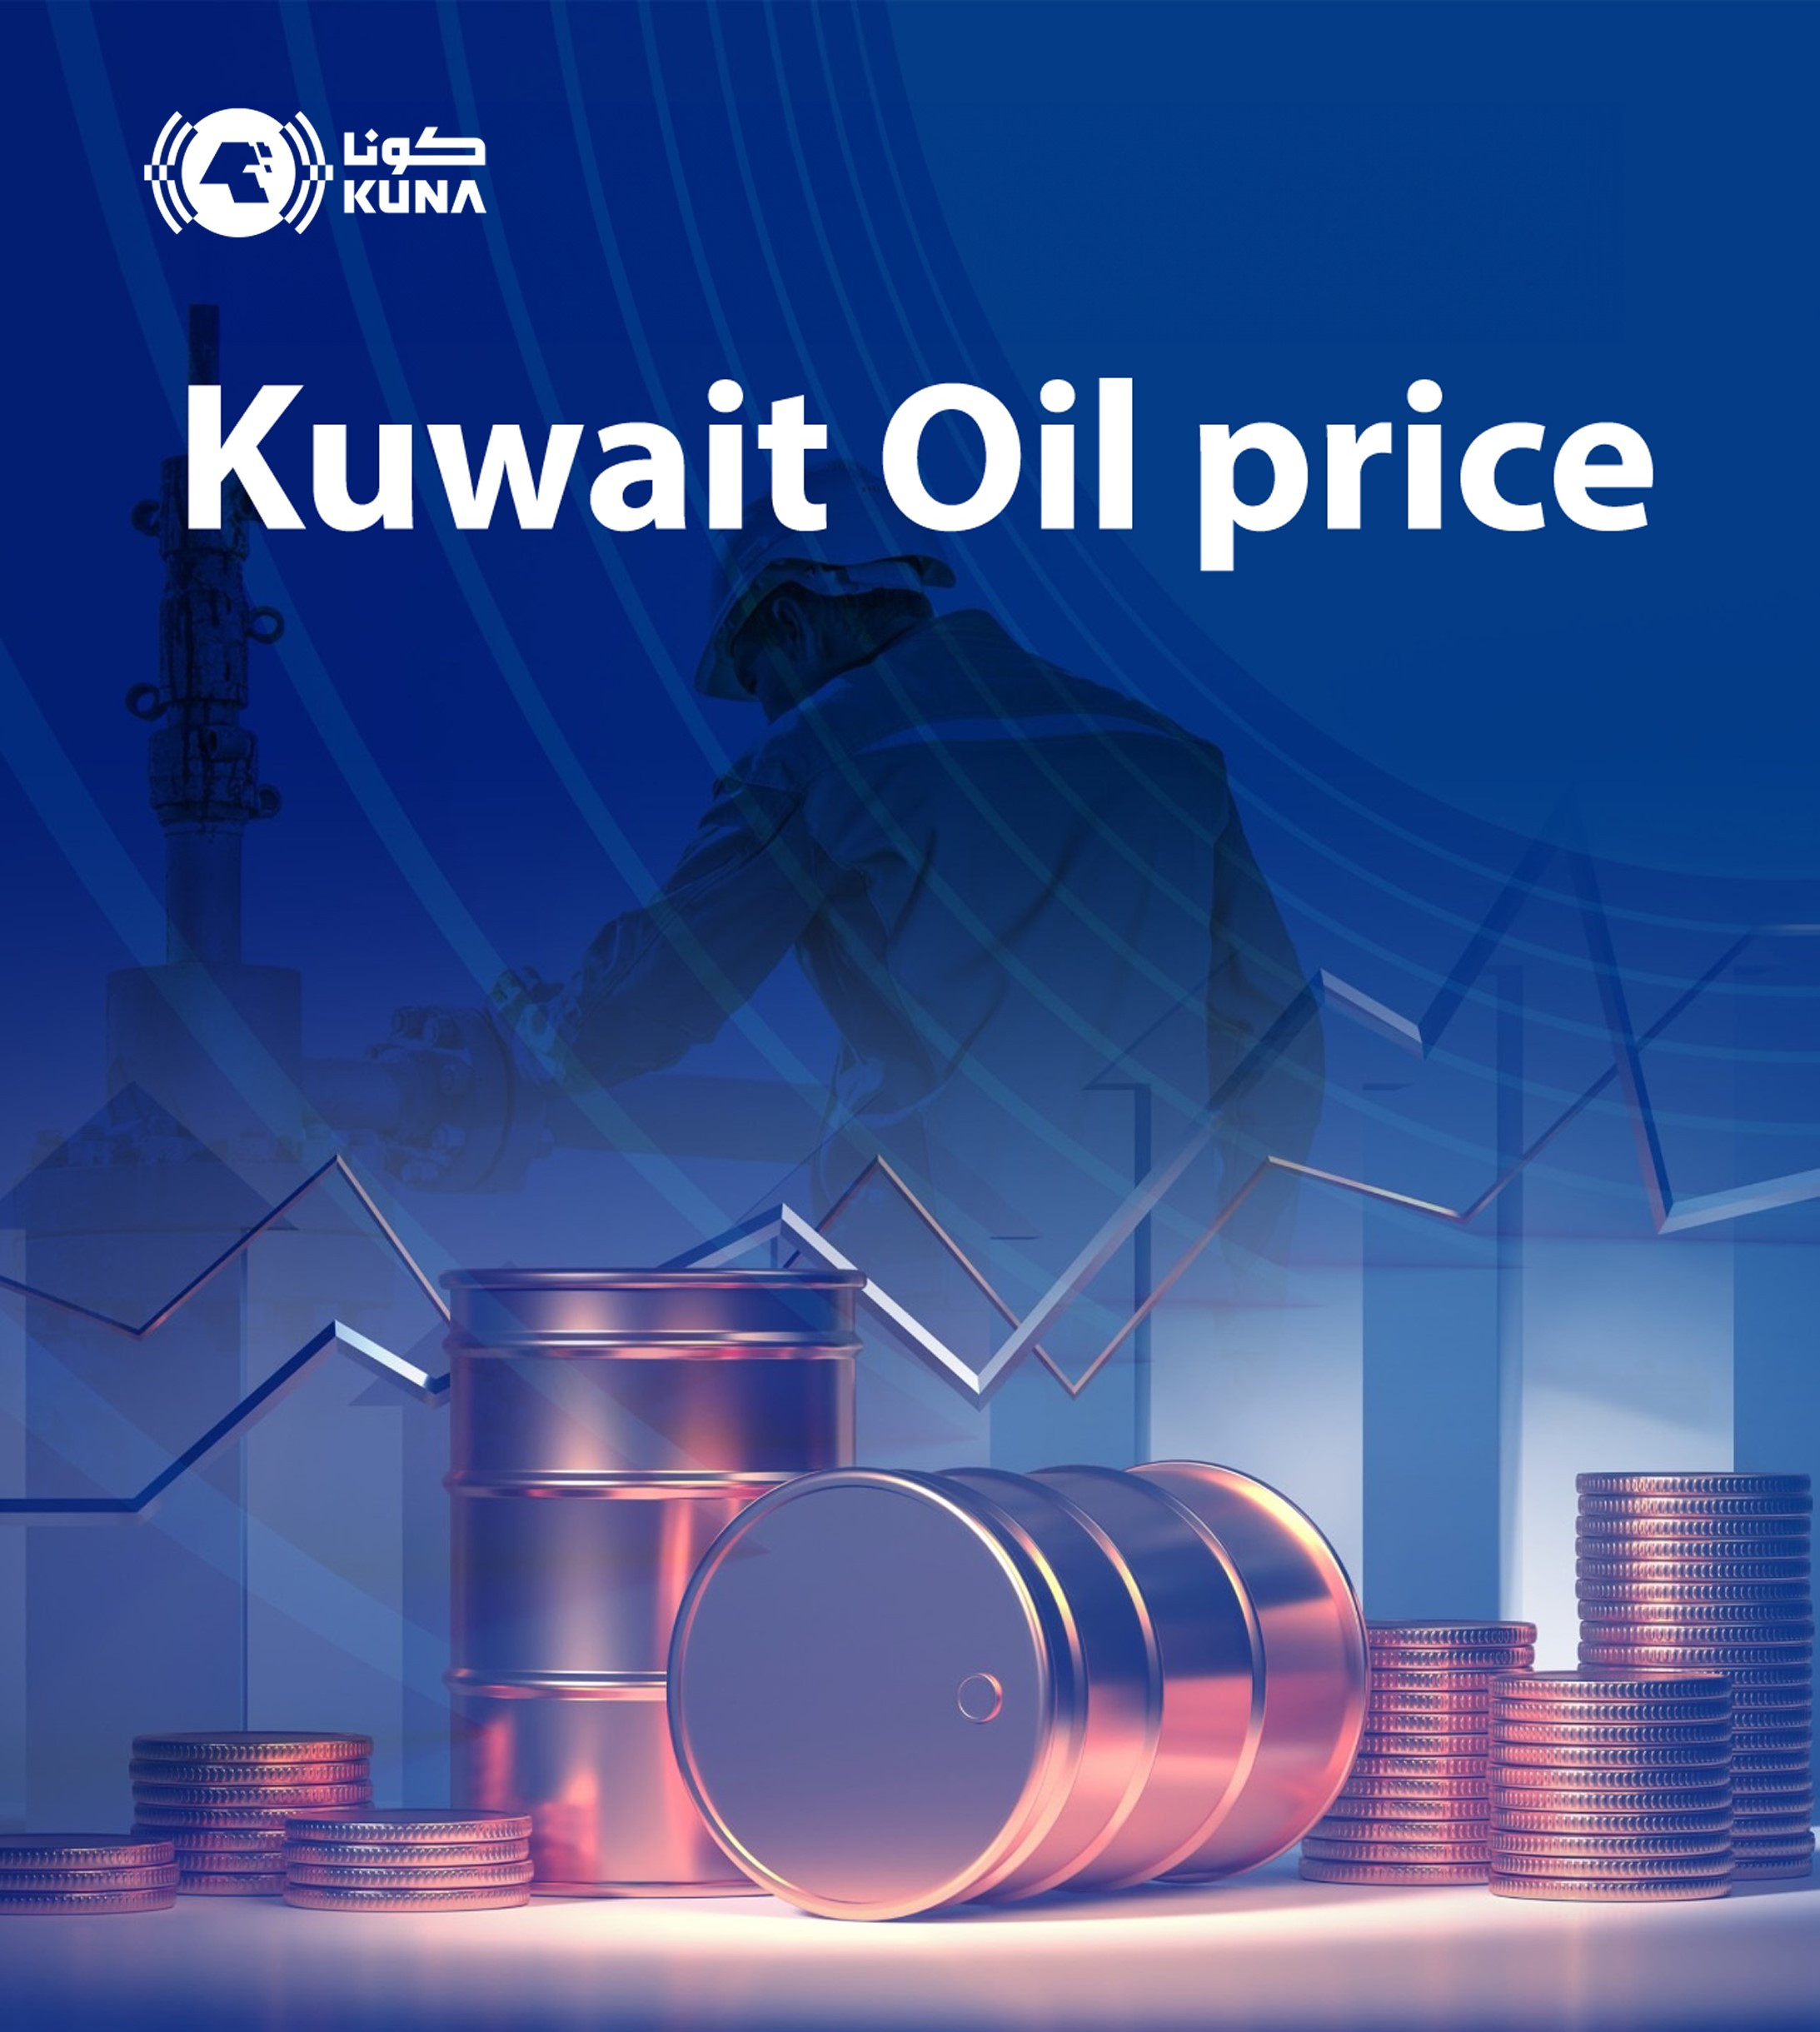 Kuwait oil price down 9 cents to USD 85.12 pb                                                                                                                                                                                                             